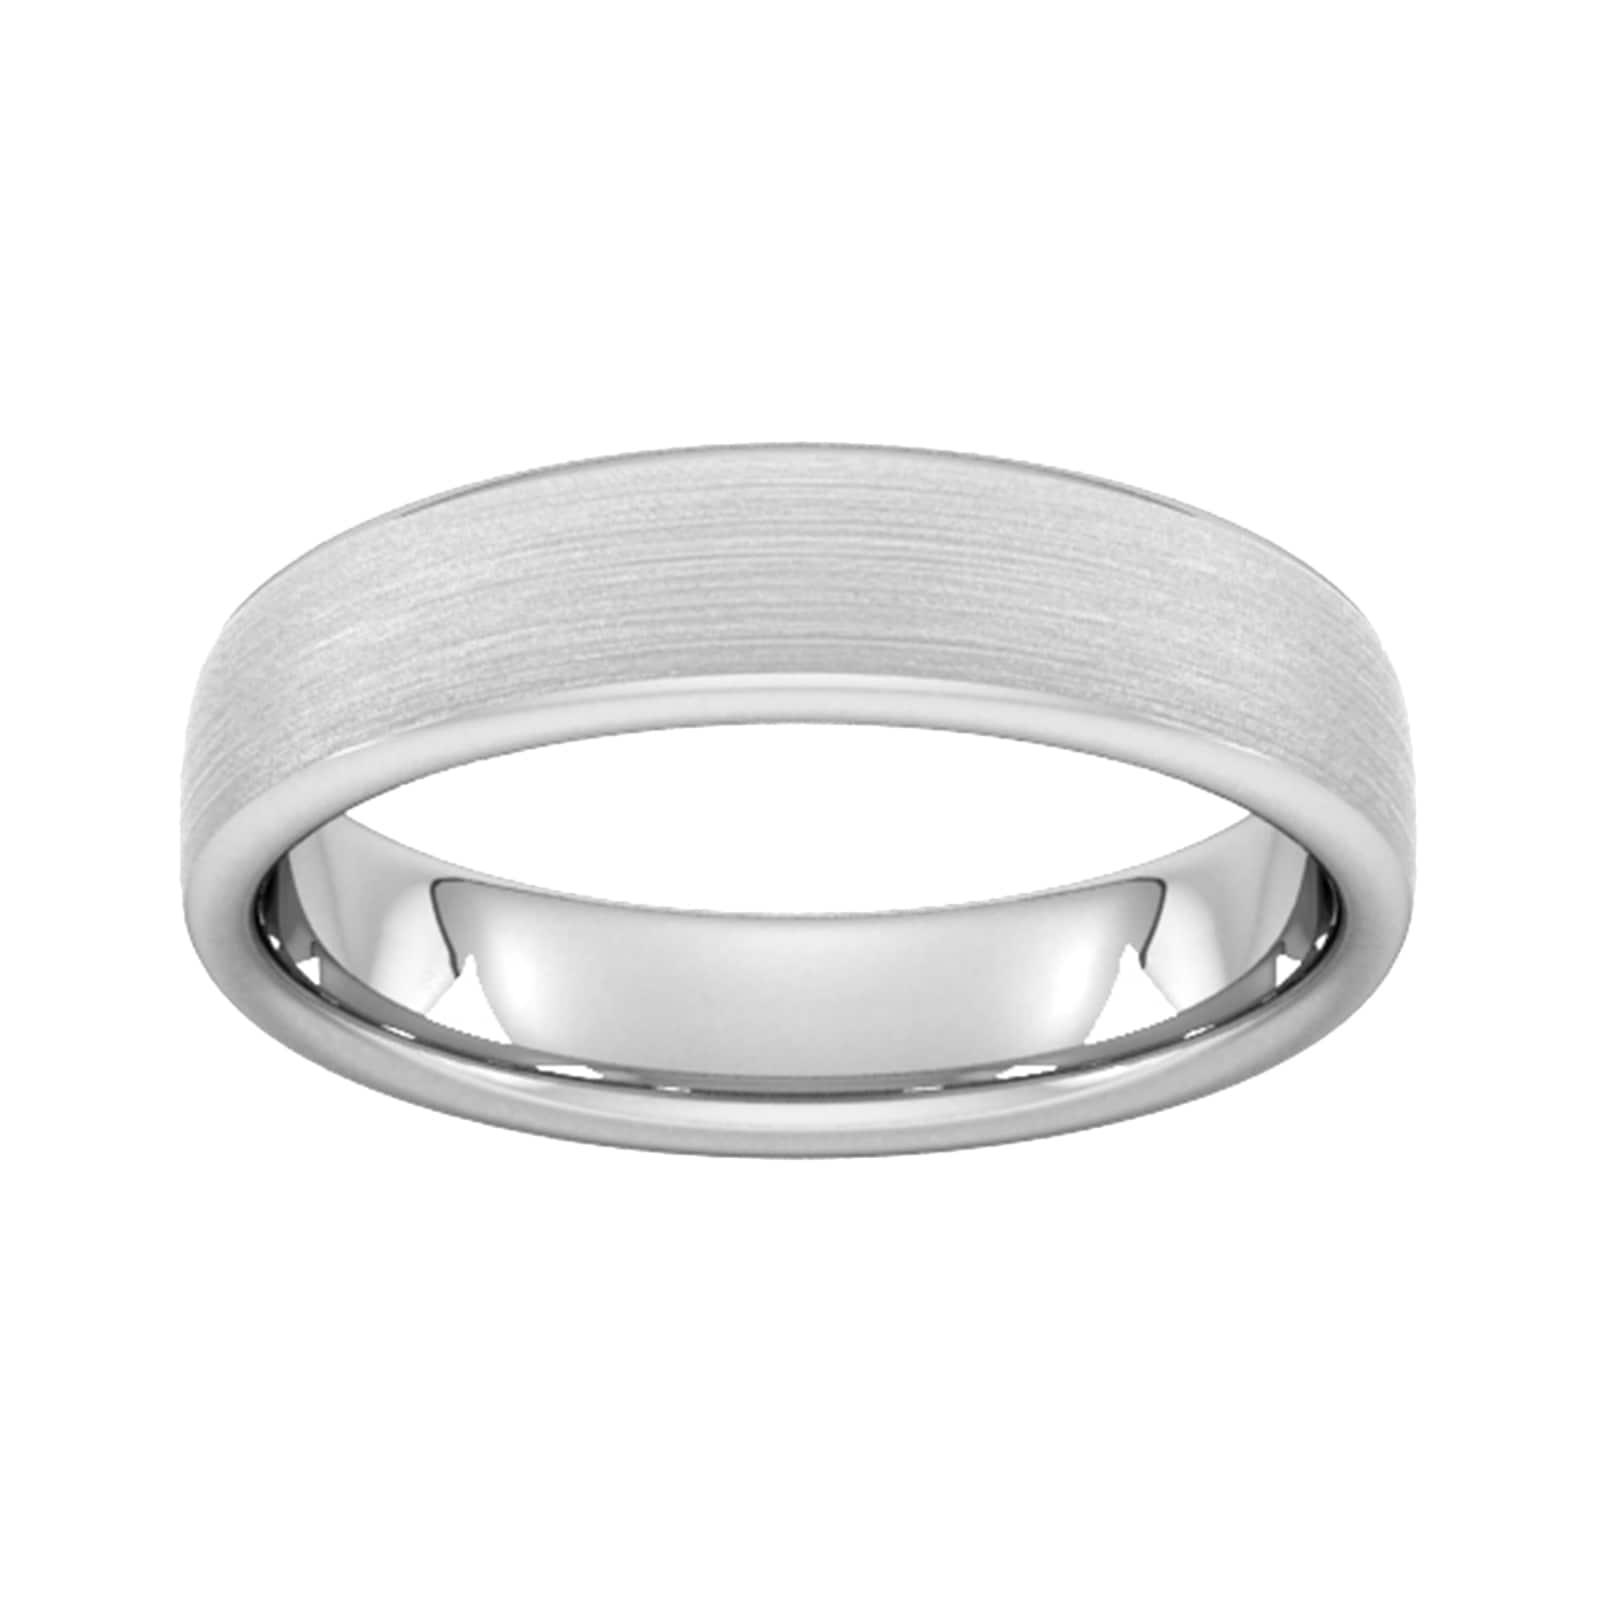 5mm D Shape Standard Matt Finished Wedding Ring In 18 Carat White Gold - Ring Size K